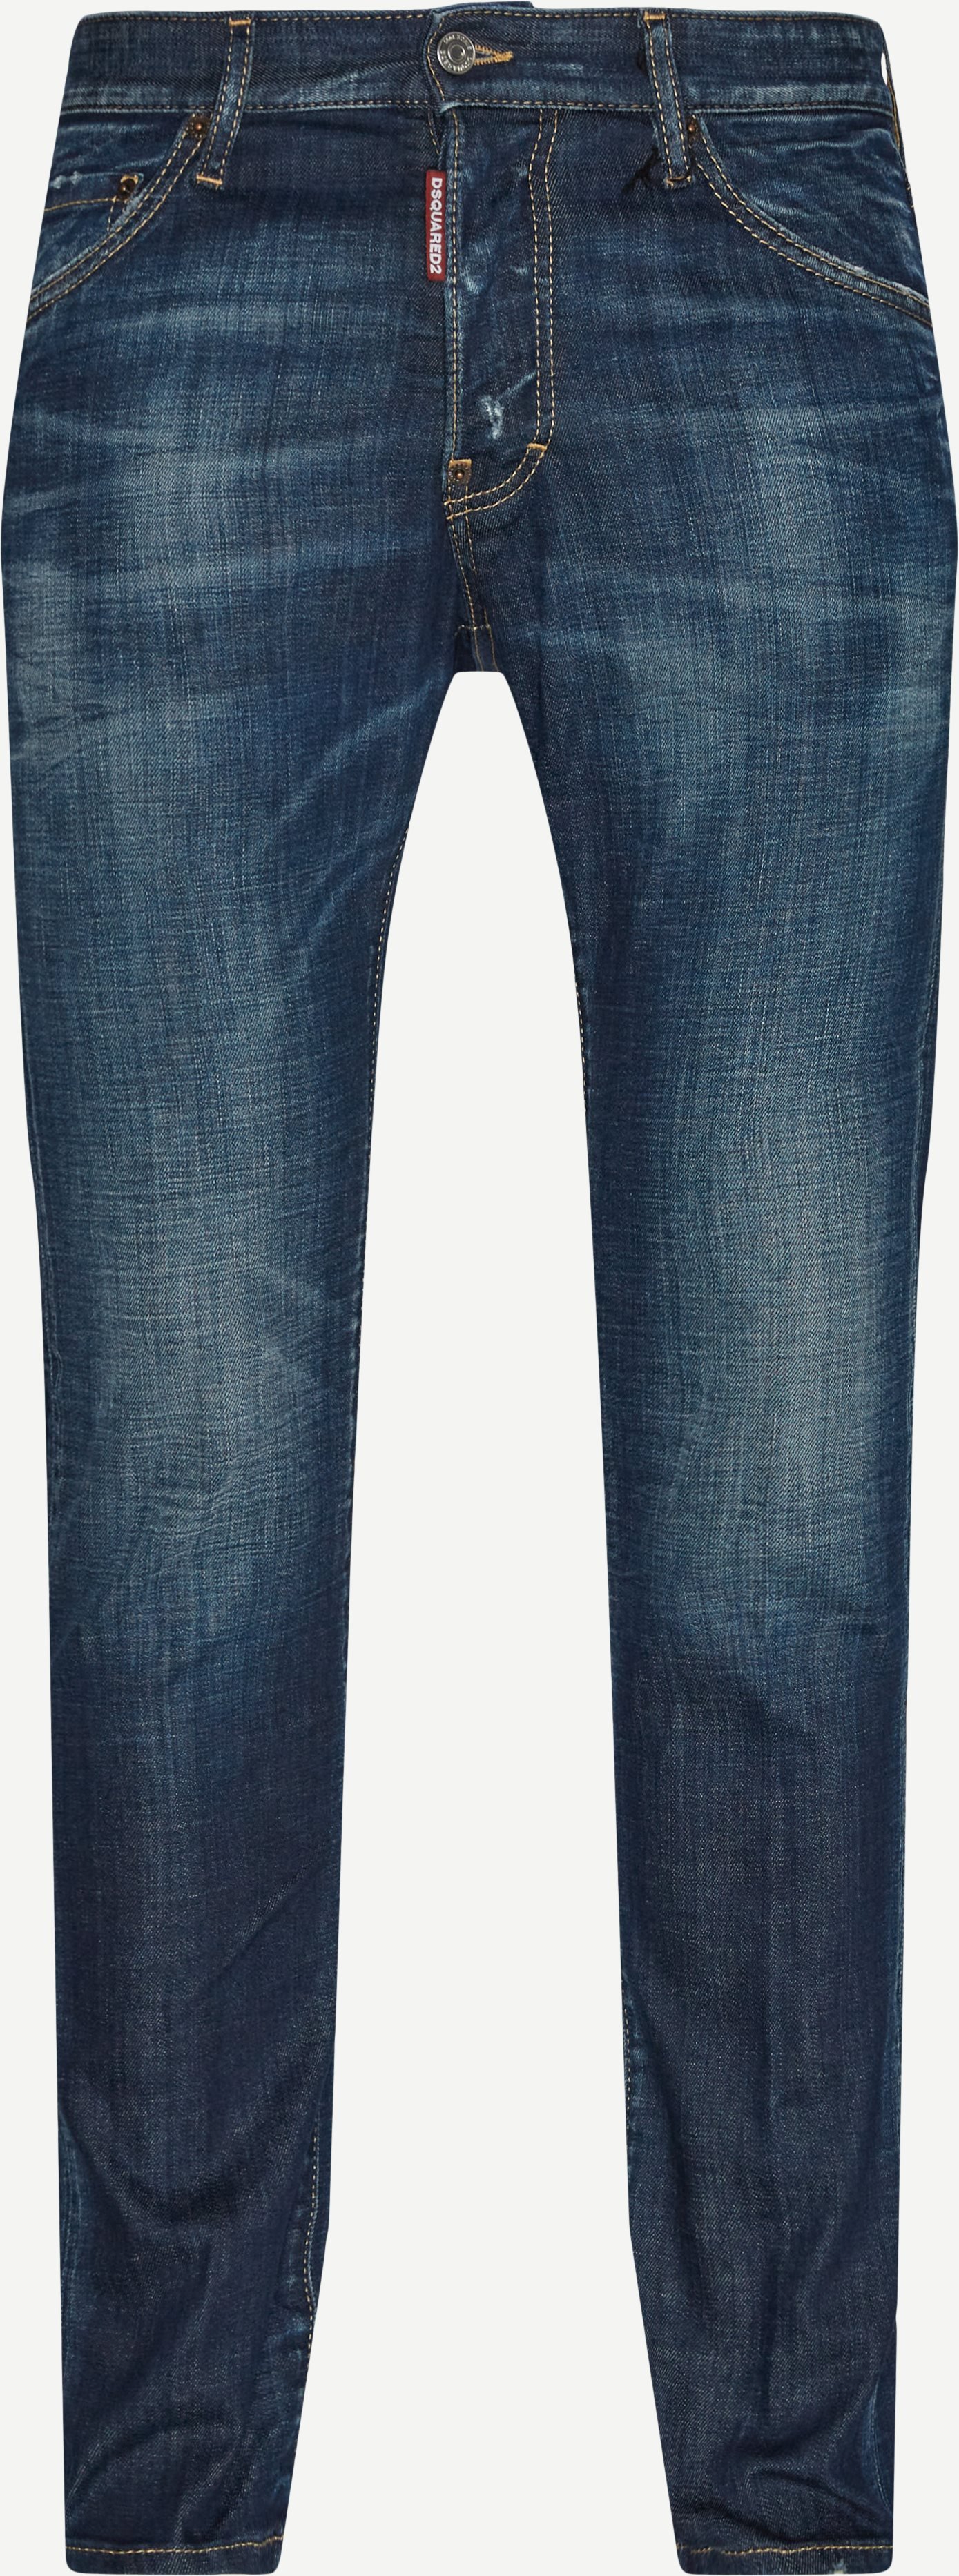 Coole Guy-Jeans - Jeans - Slim fit - Jeans-Blau